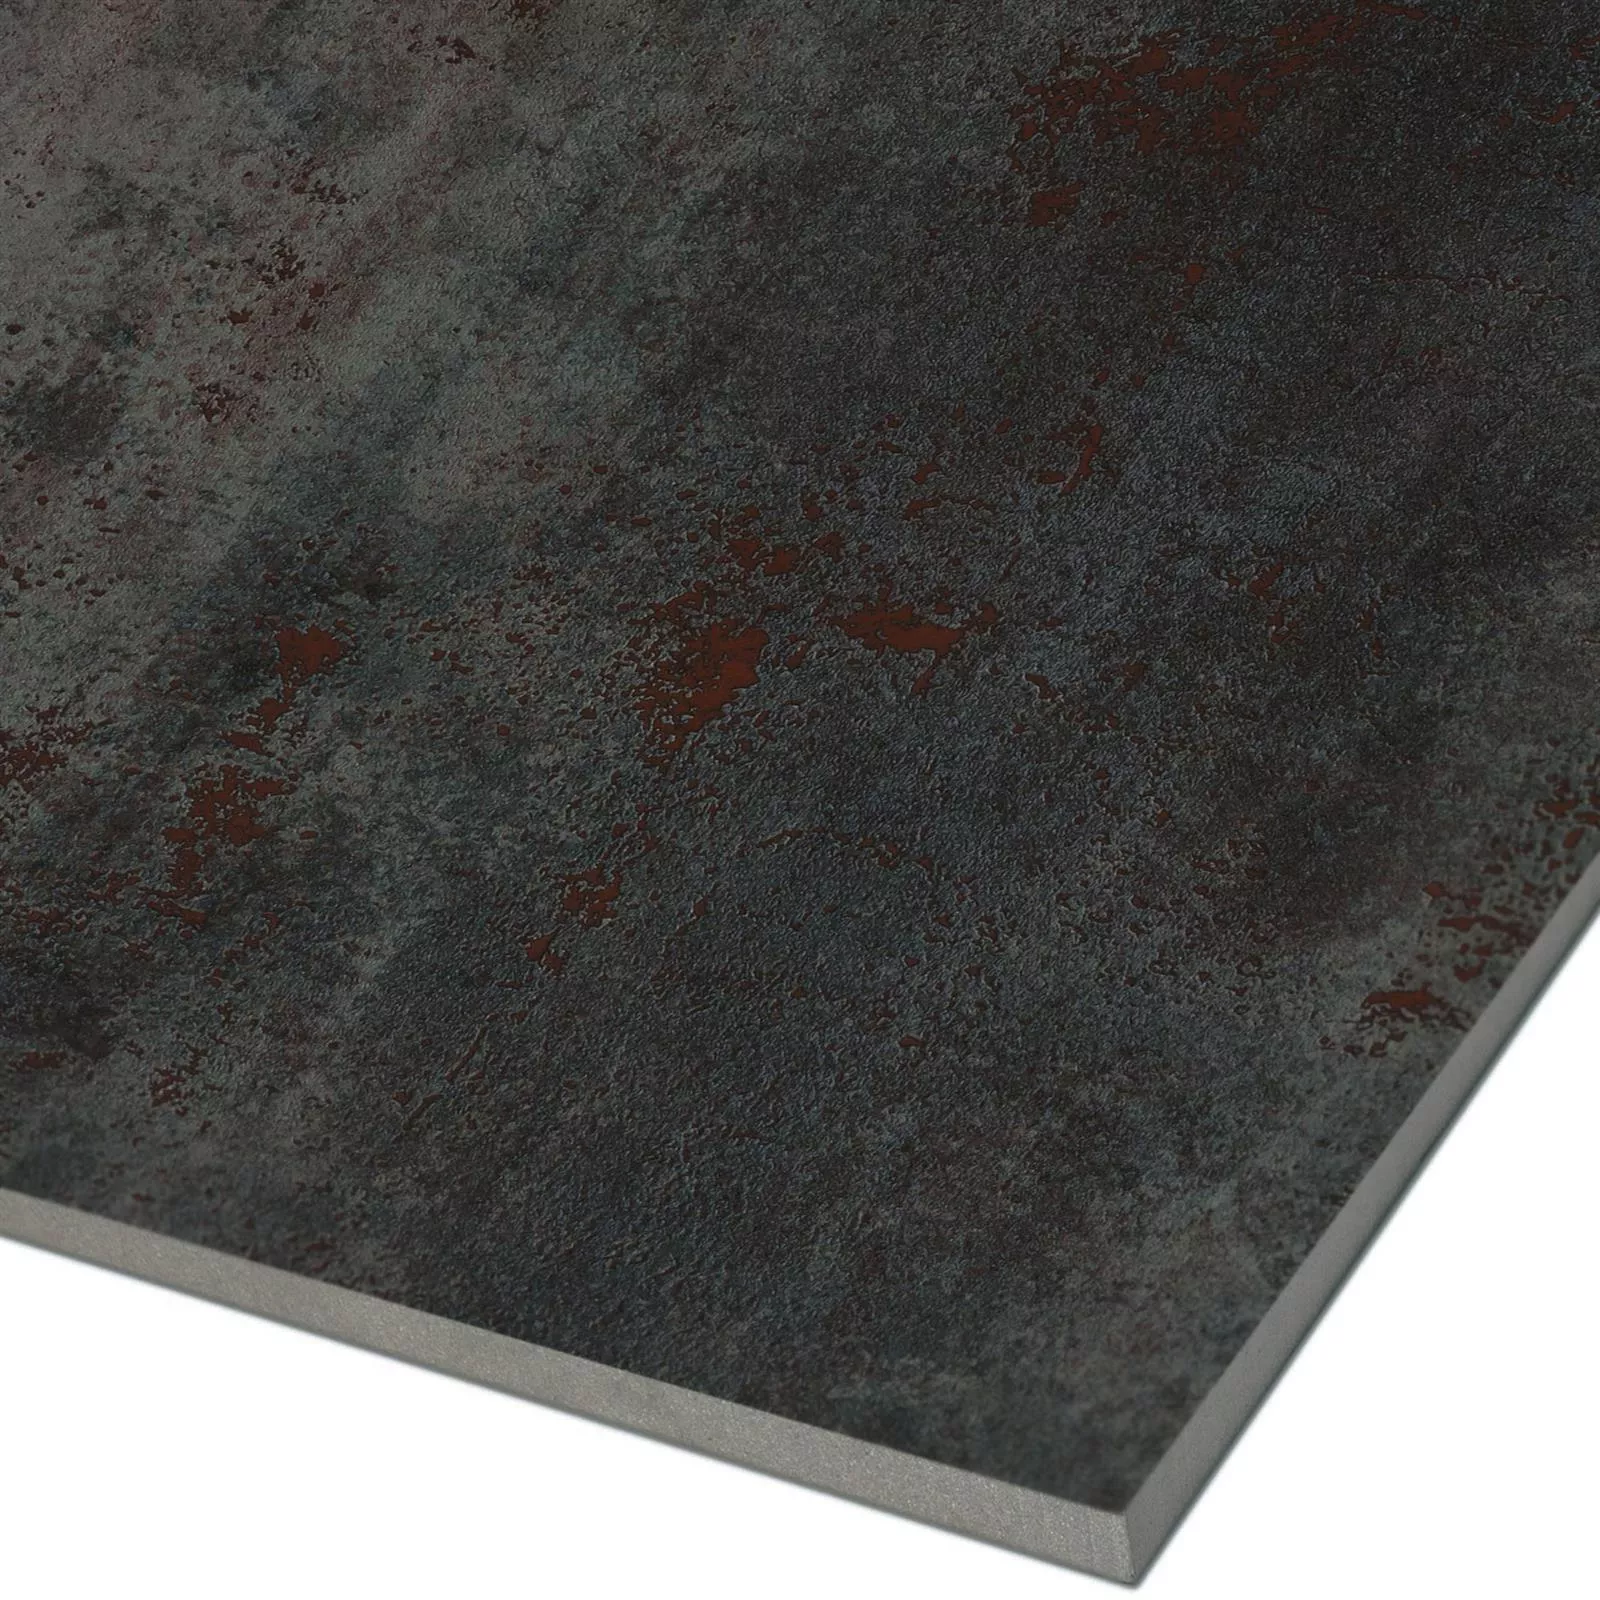 Podlahové Dlaždice Phantom Kovový Vzhled Naleštěná Titanium 60x60cm